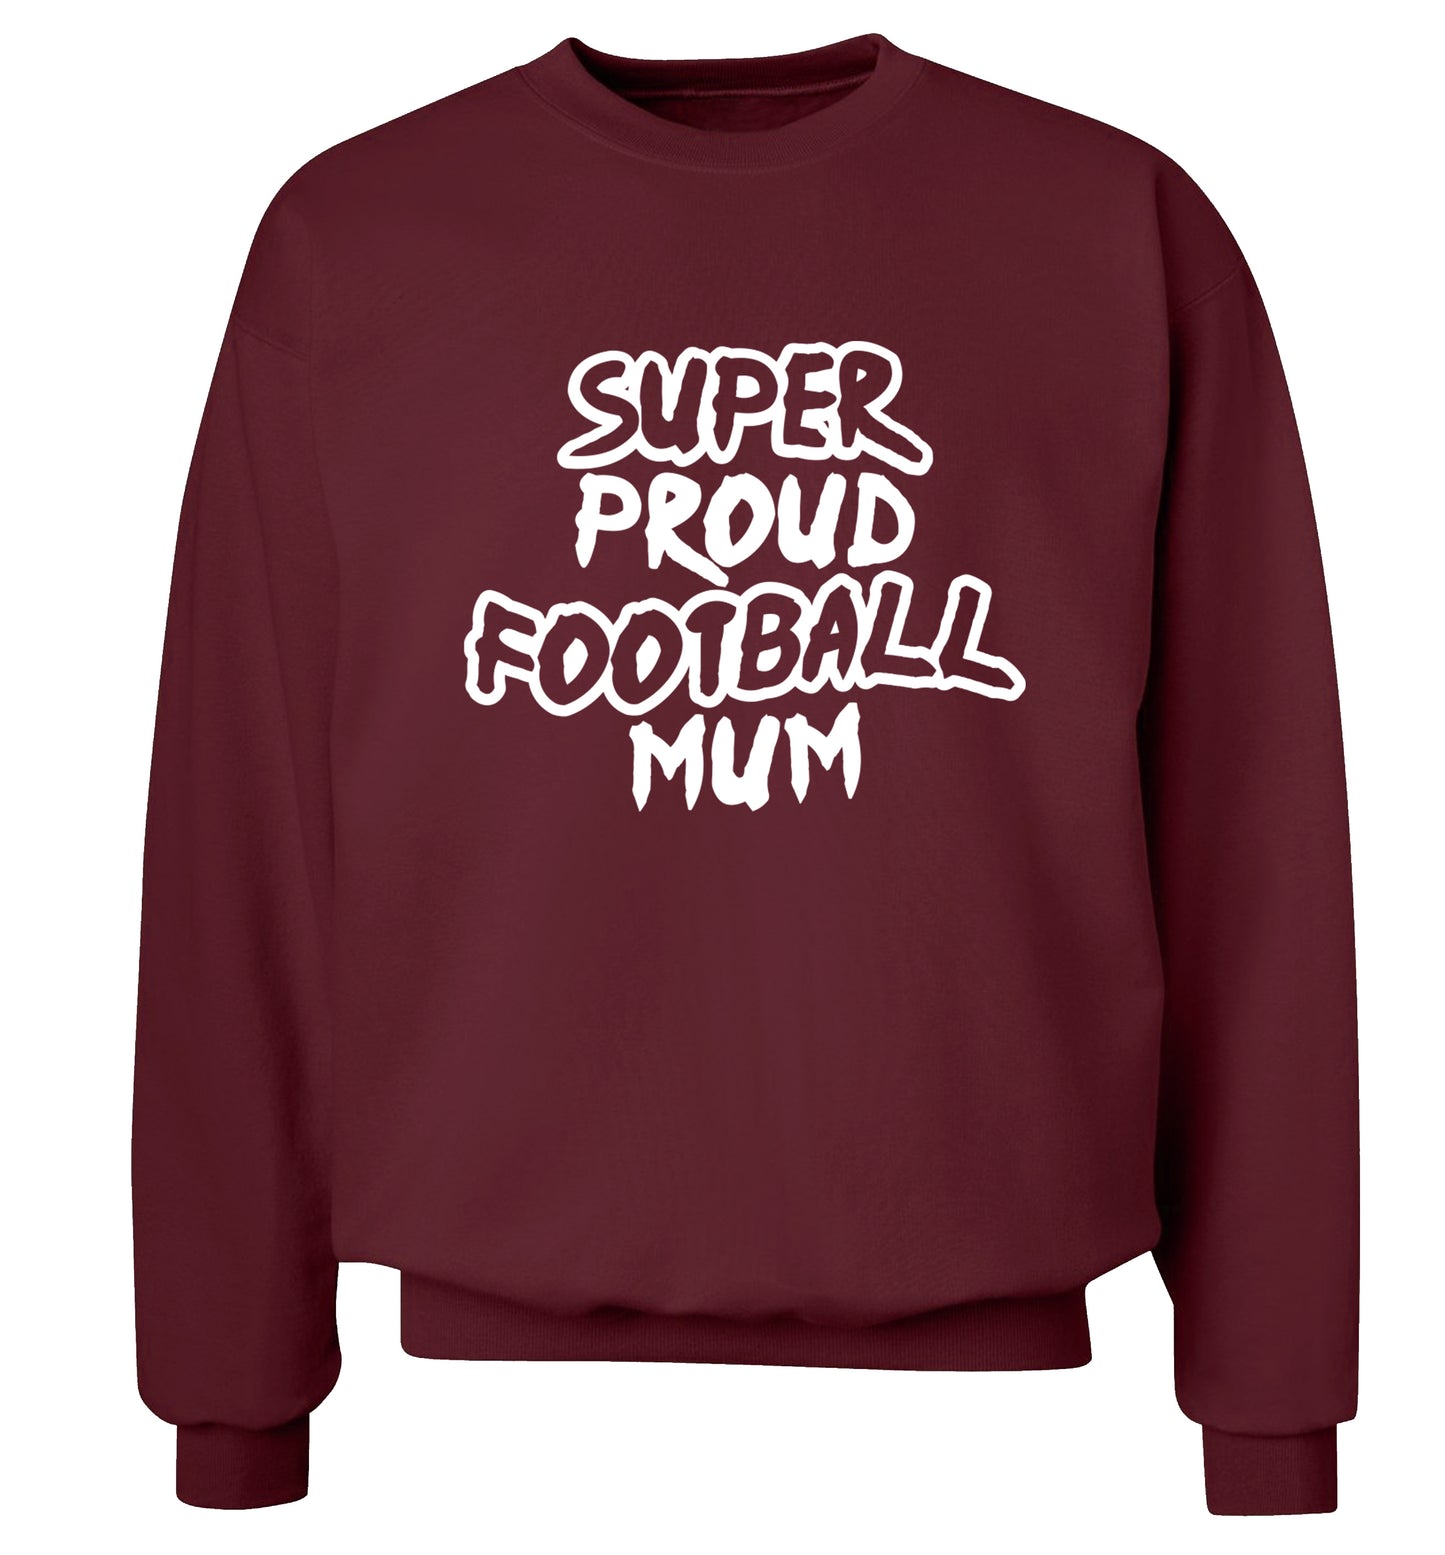 Super proud football mum Adult's unisexmaroon Sweater 2XL